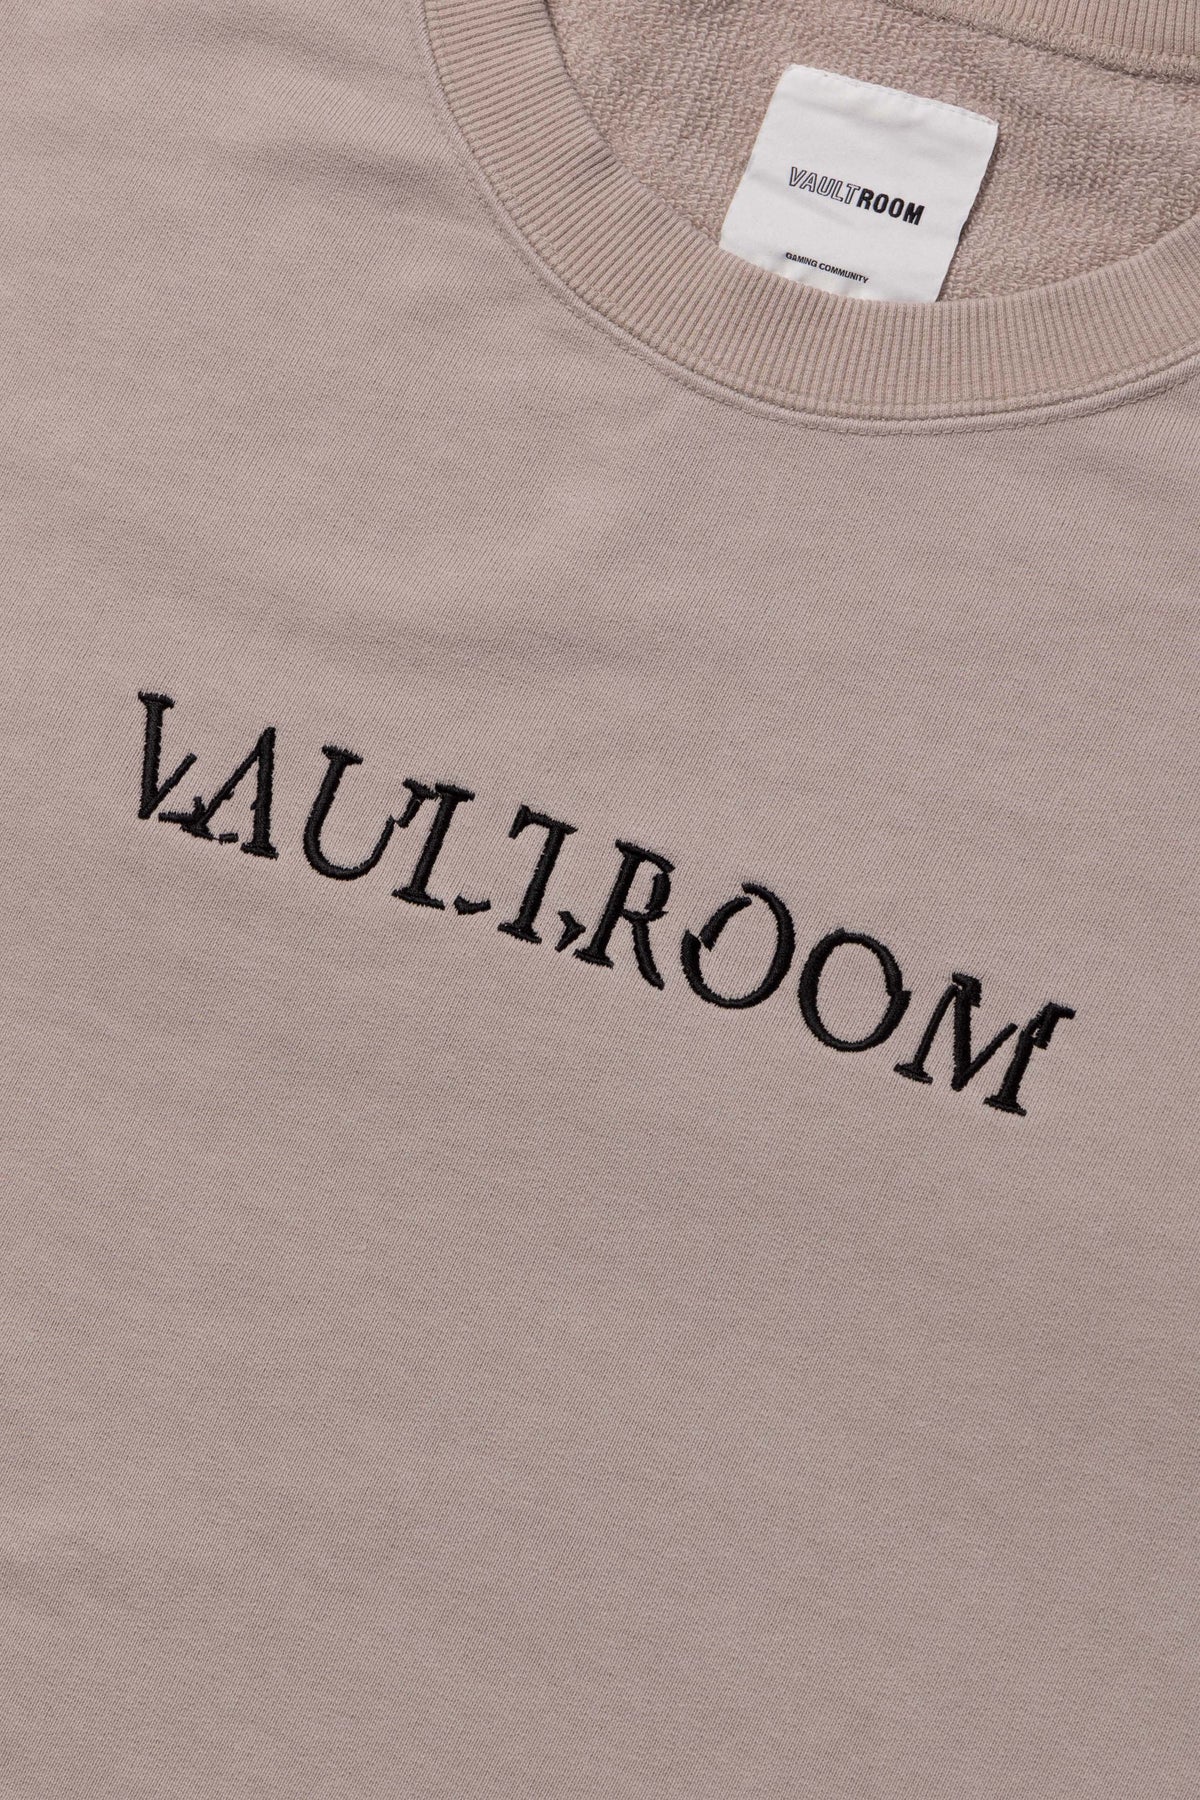 vaultroom ベスト